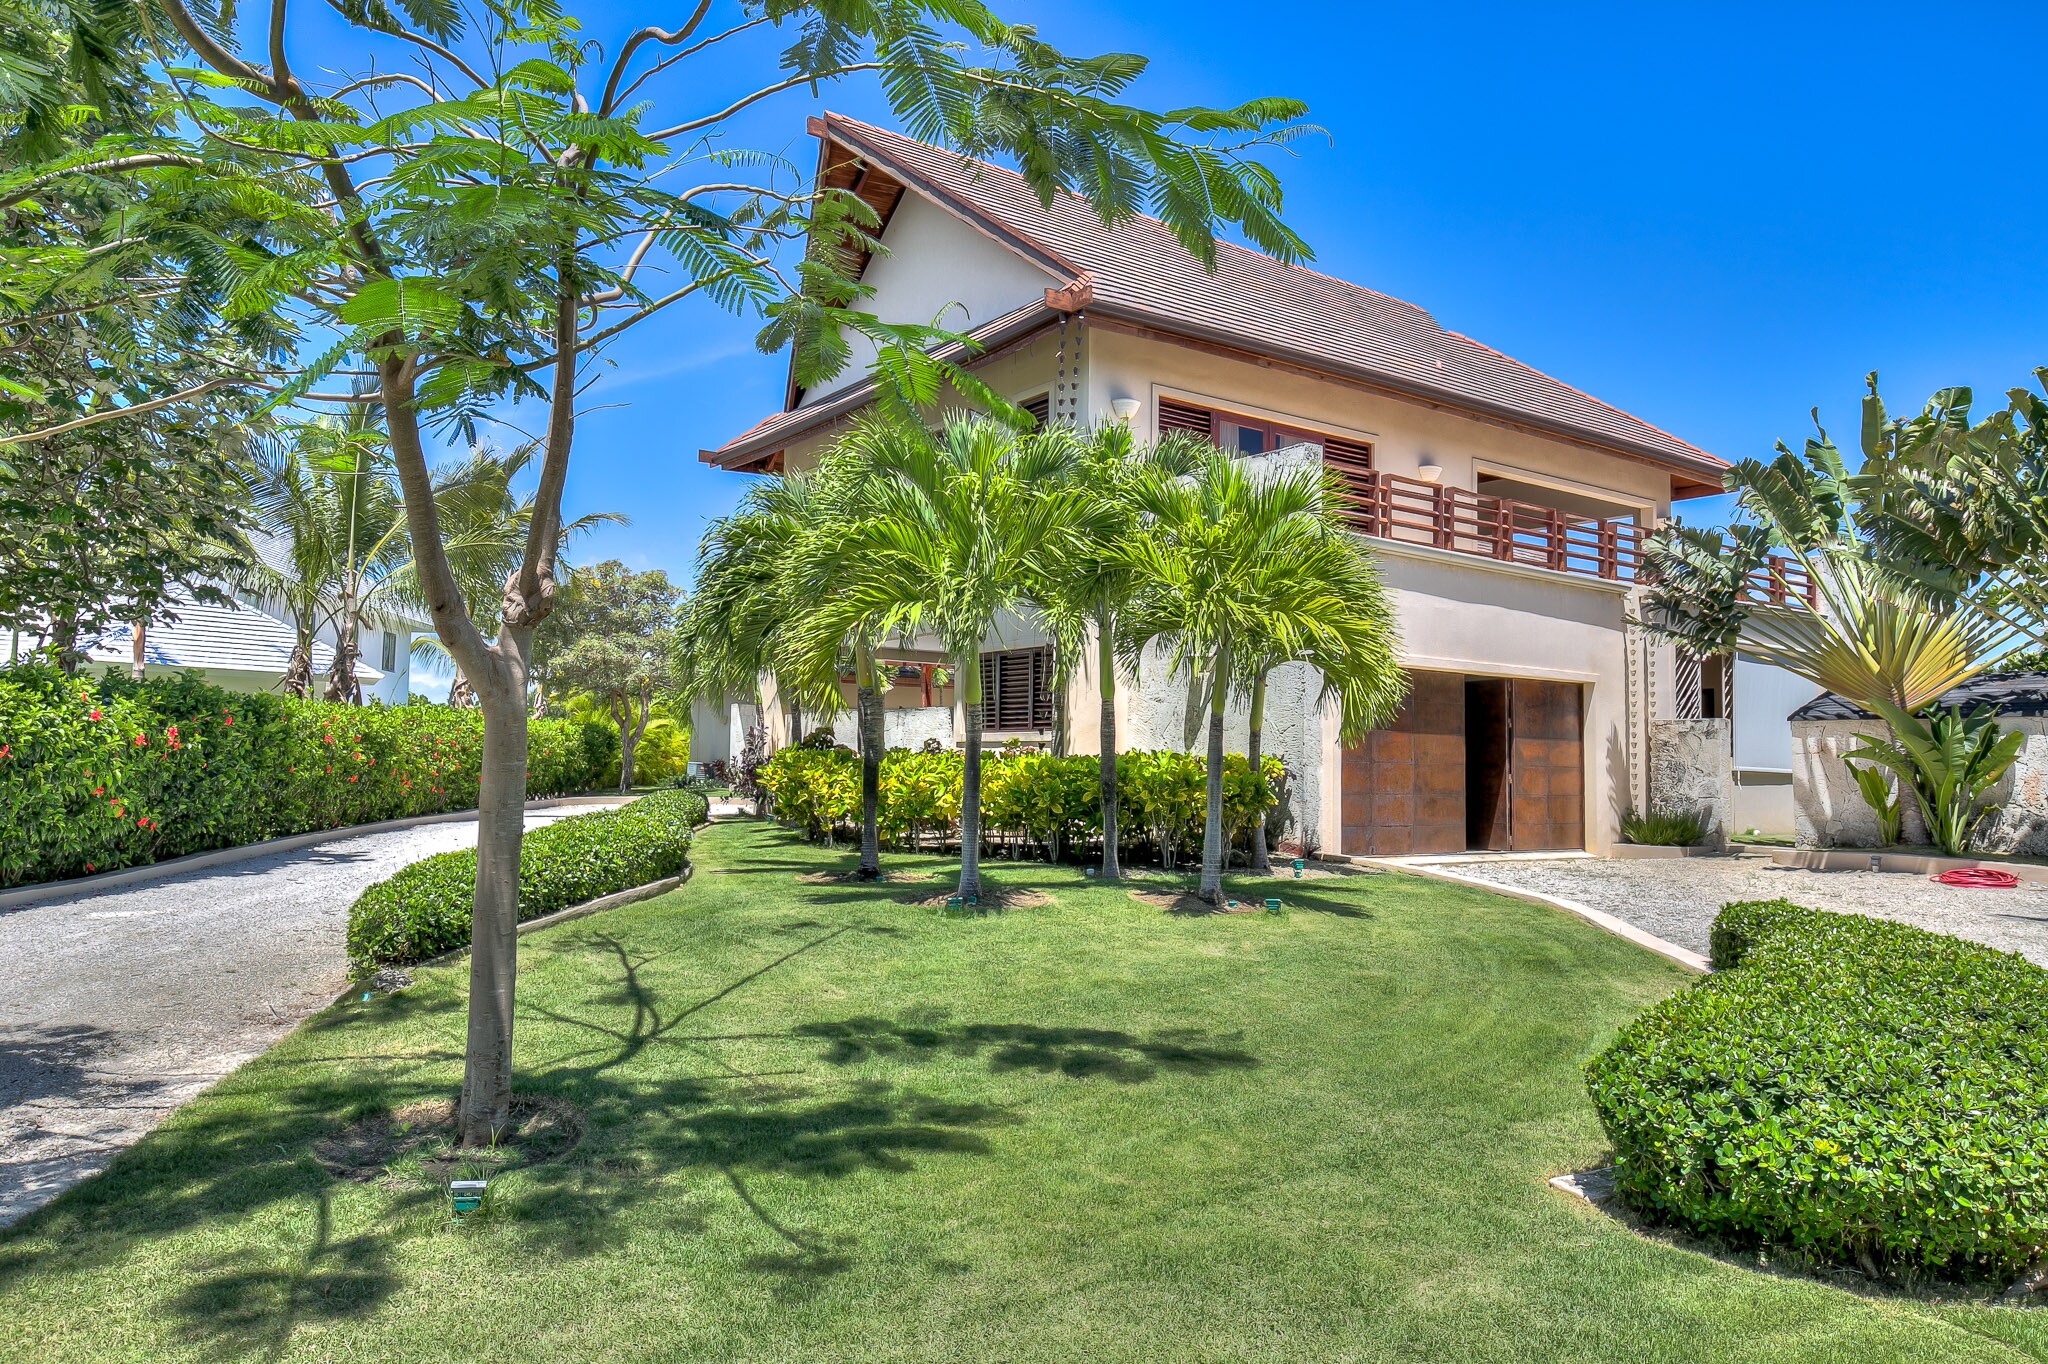 Property Image 2 - Villa Caballet - Eco-friendly villa w/ amazing Golf view in Punta Cana